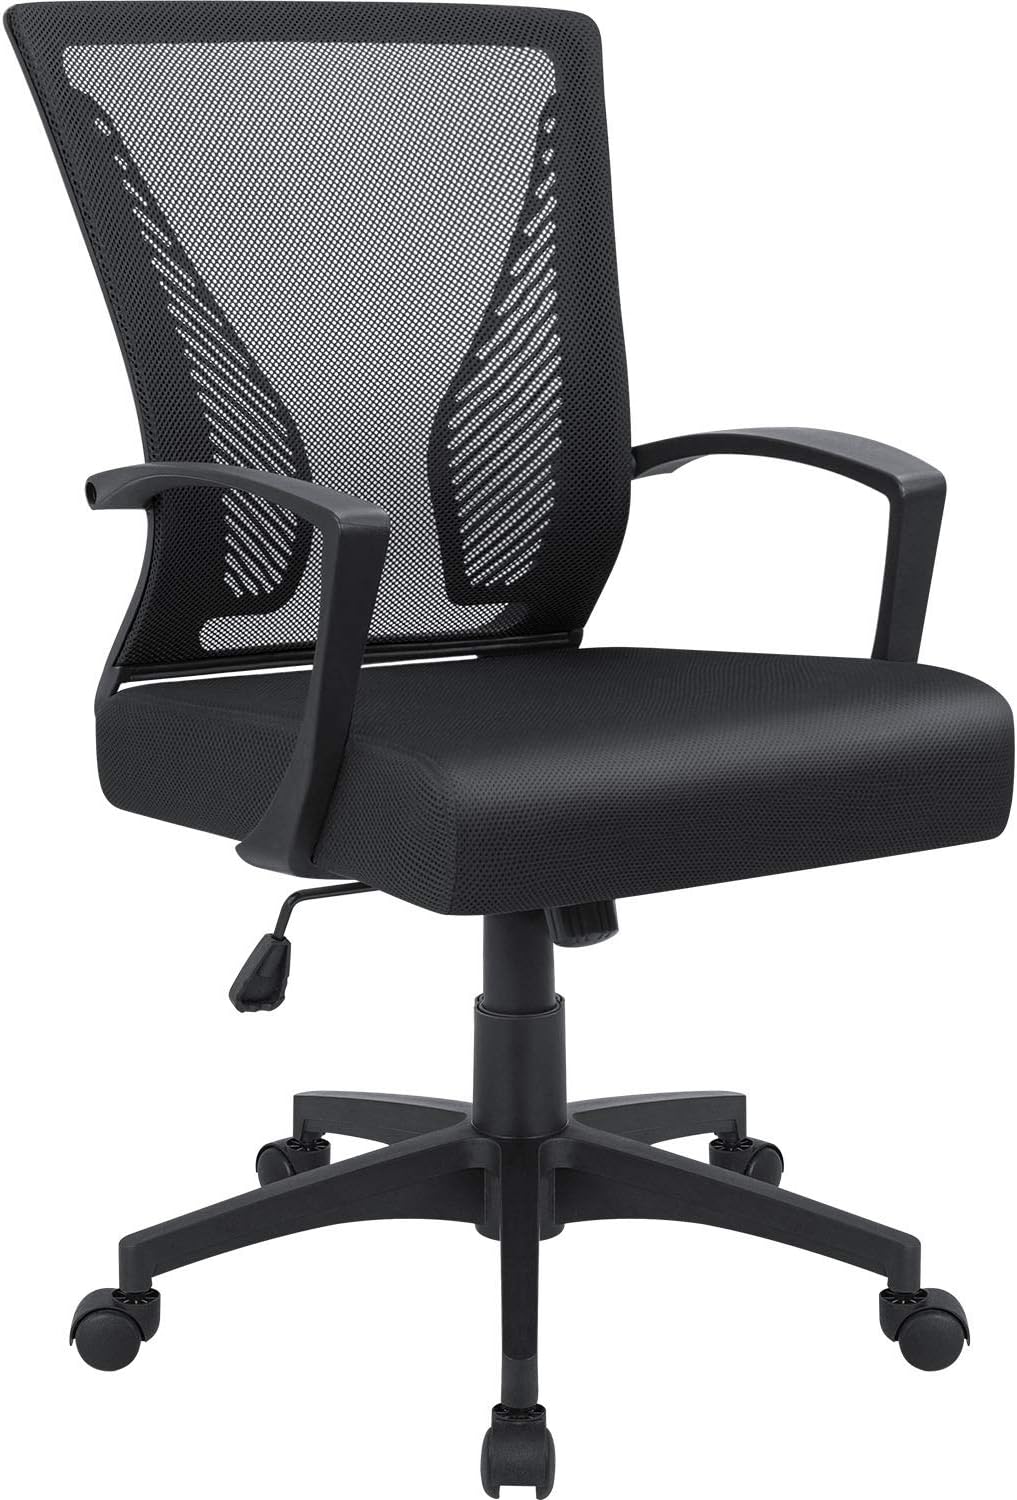 Furmax Office Chair Mid Back Swivel Lumbar Support [...]